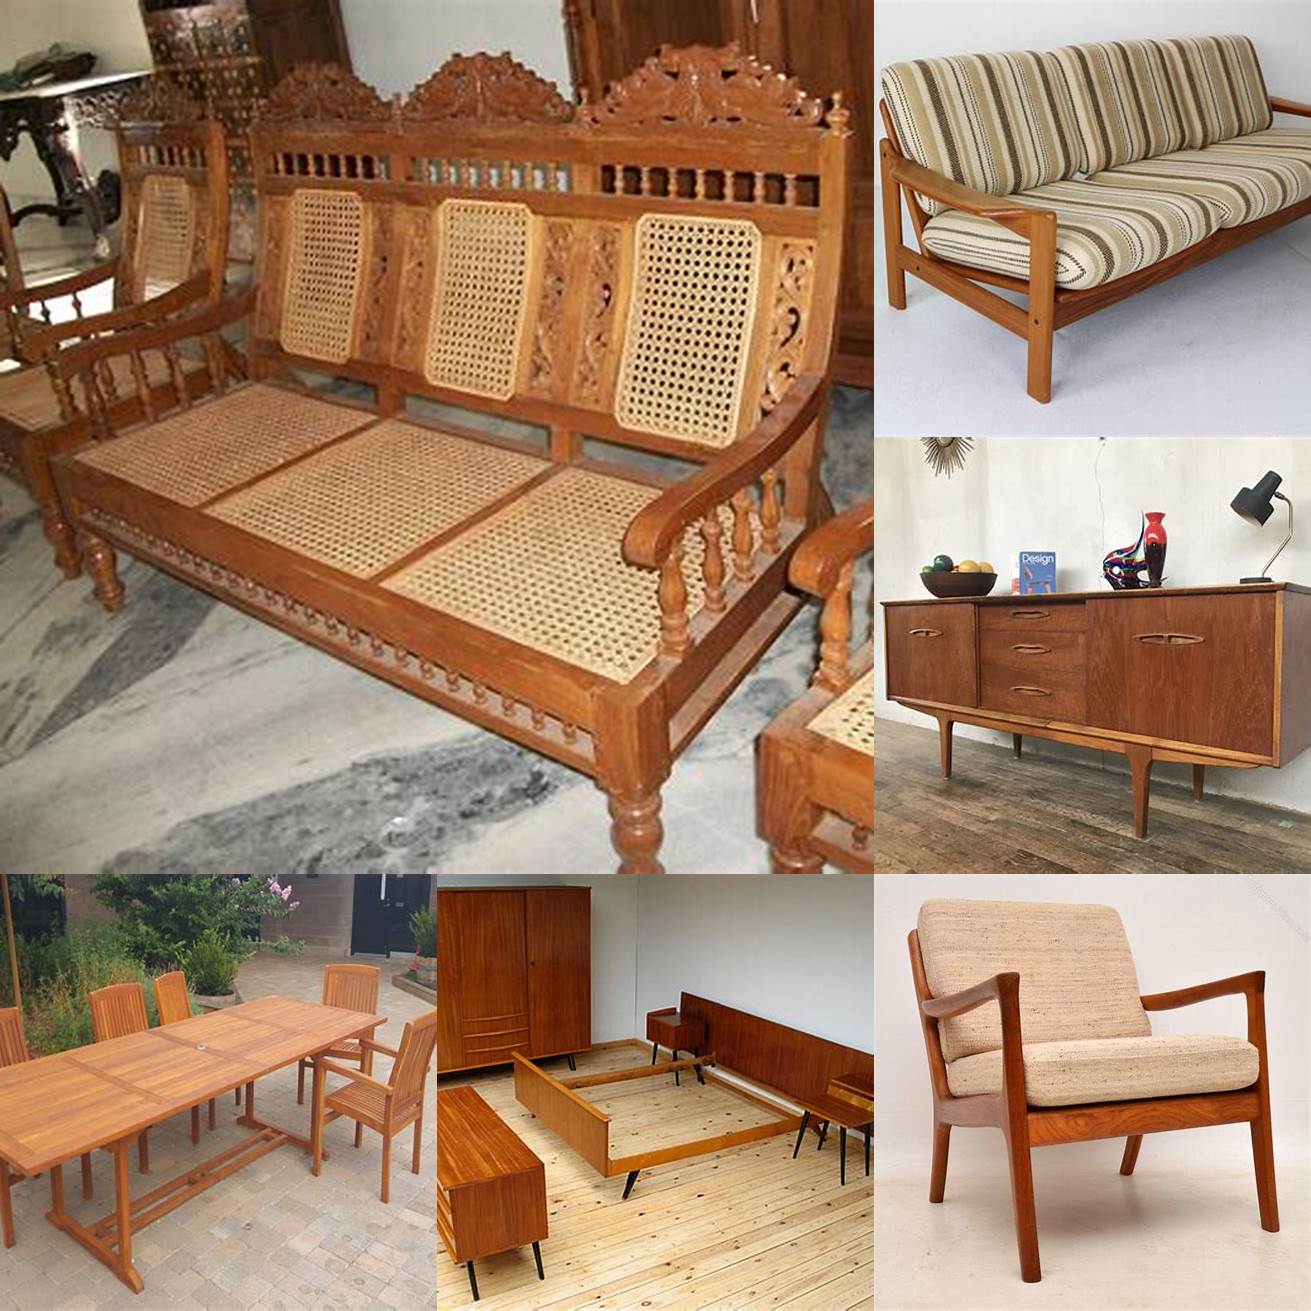 Teak furniture history